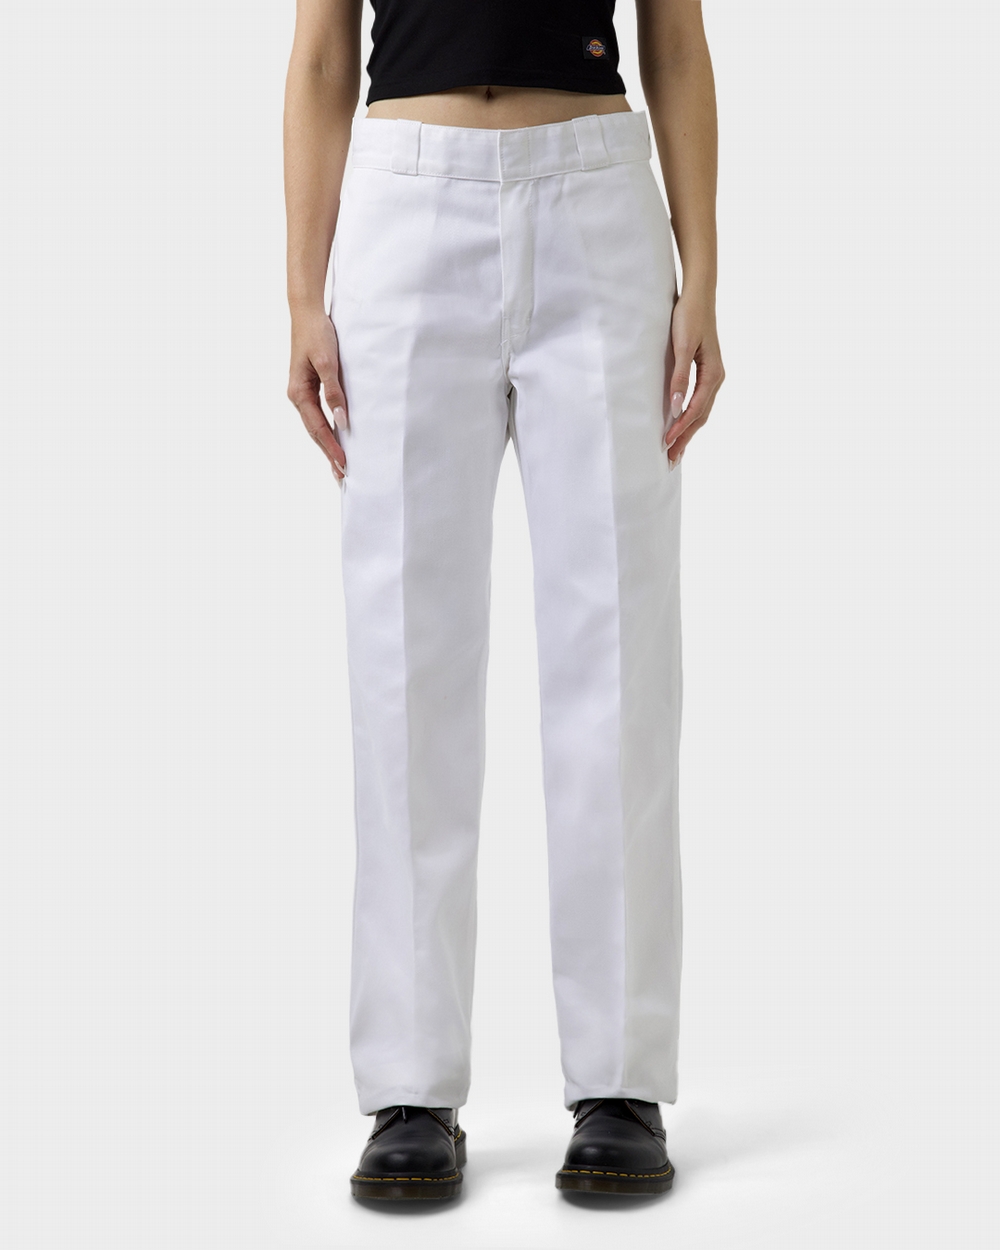 Gray XS WOMEN FASHION Trousers Print discount 65% Stradivarius Chino trouser 